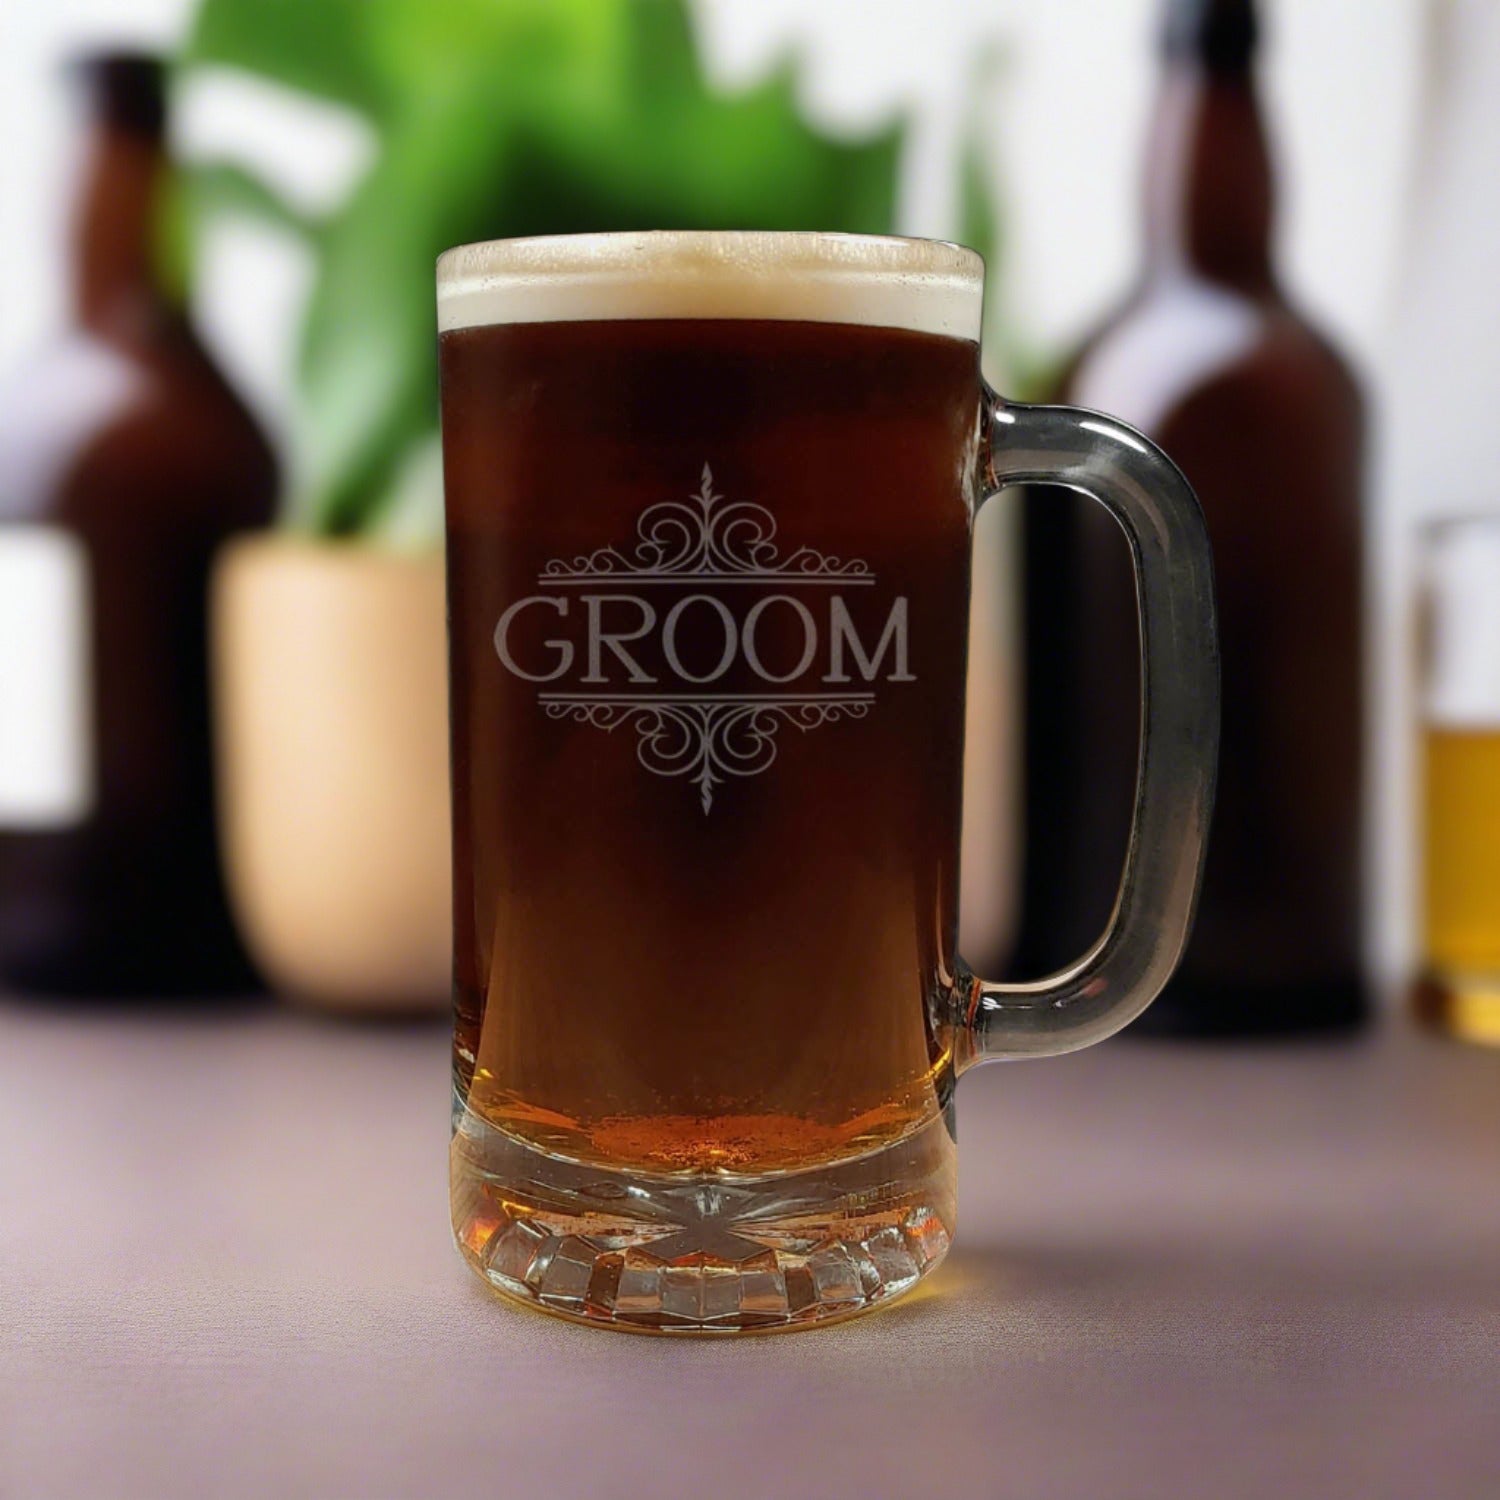 Classical Groom Beer Mug design - Dark Beer - Copyright Hues in Glass